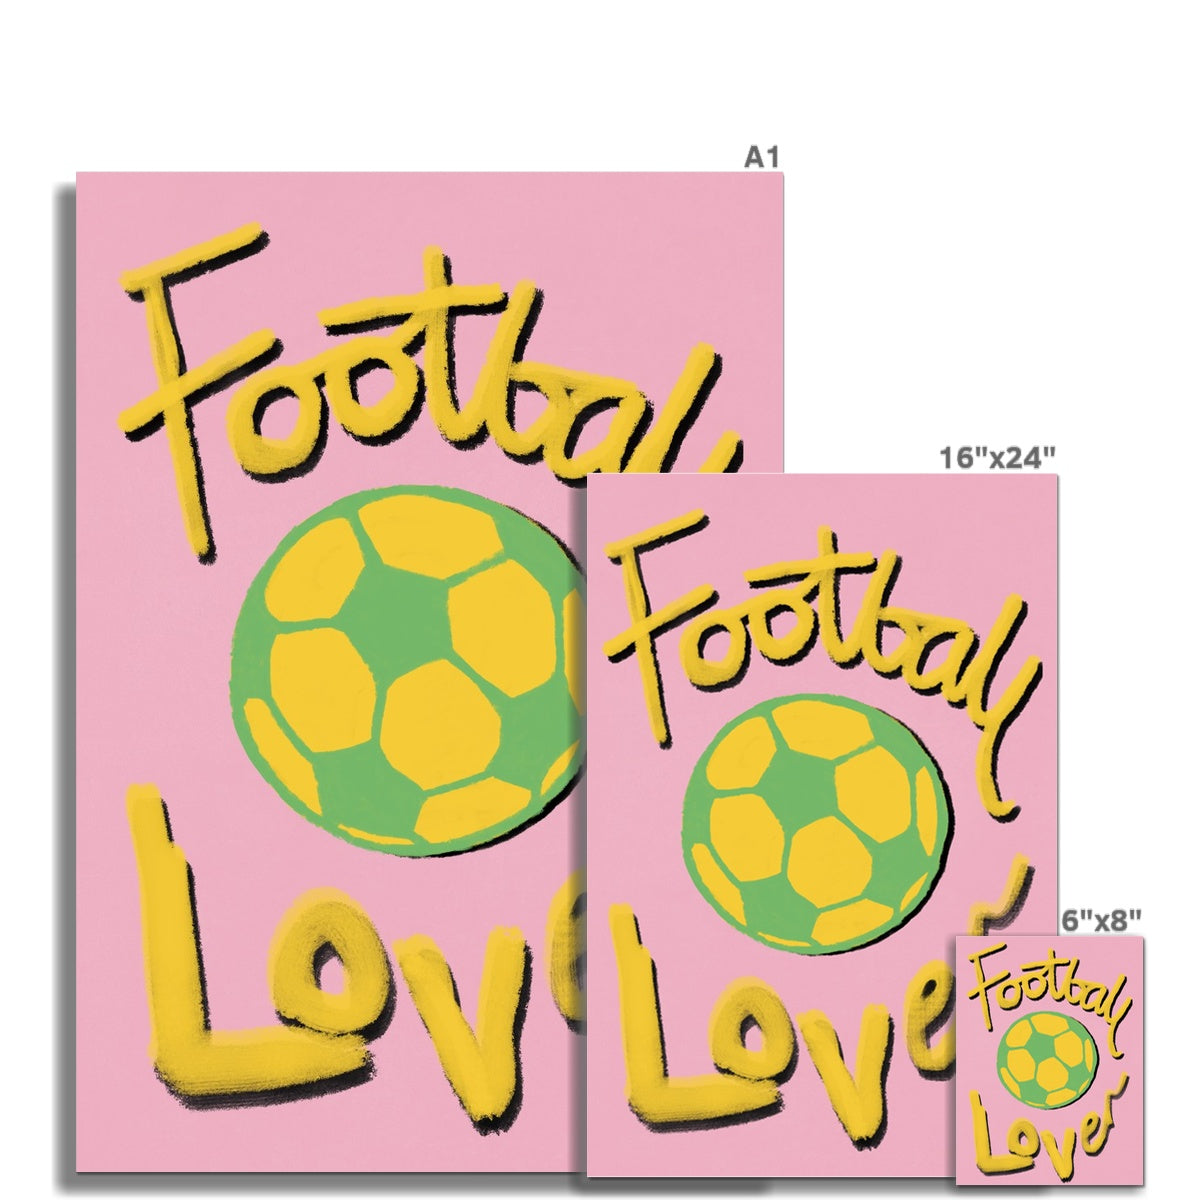 Football Lover Print - Pink, Yellow, Green Fine Art Print